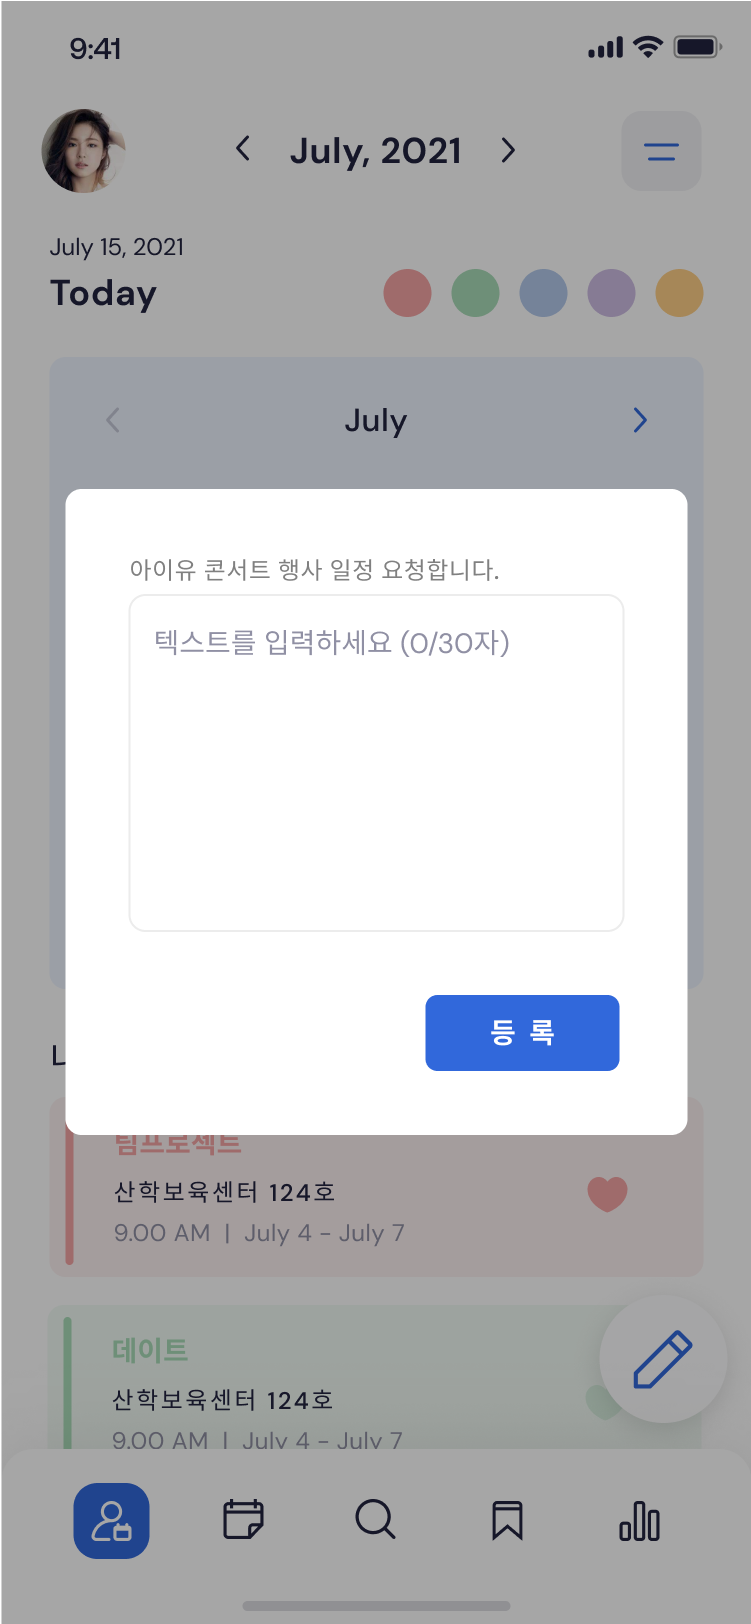 Tab_1-app-info-request-일정-요청.png